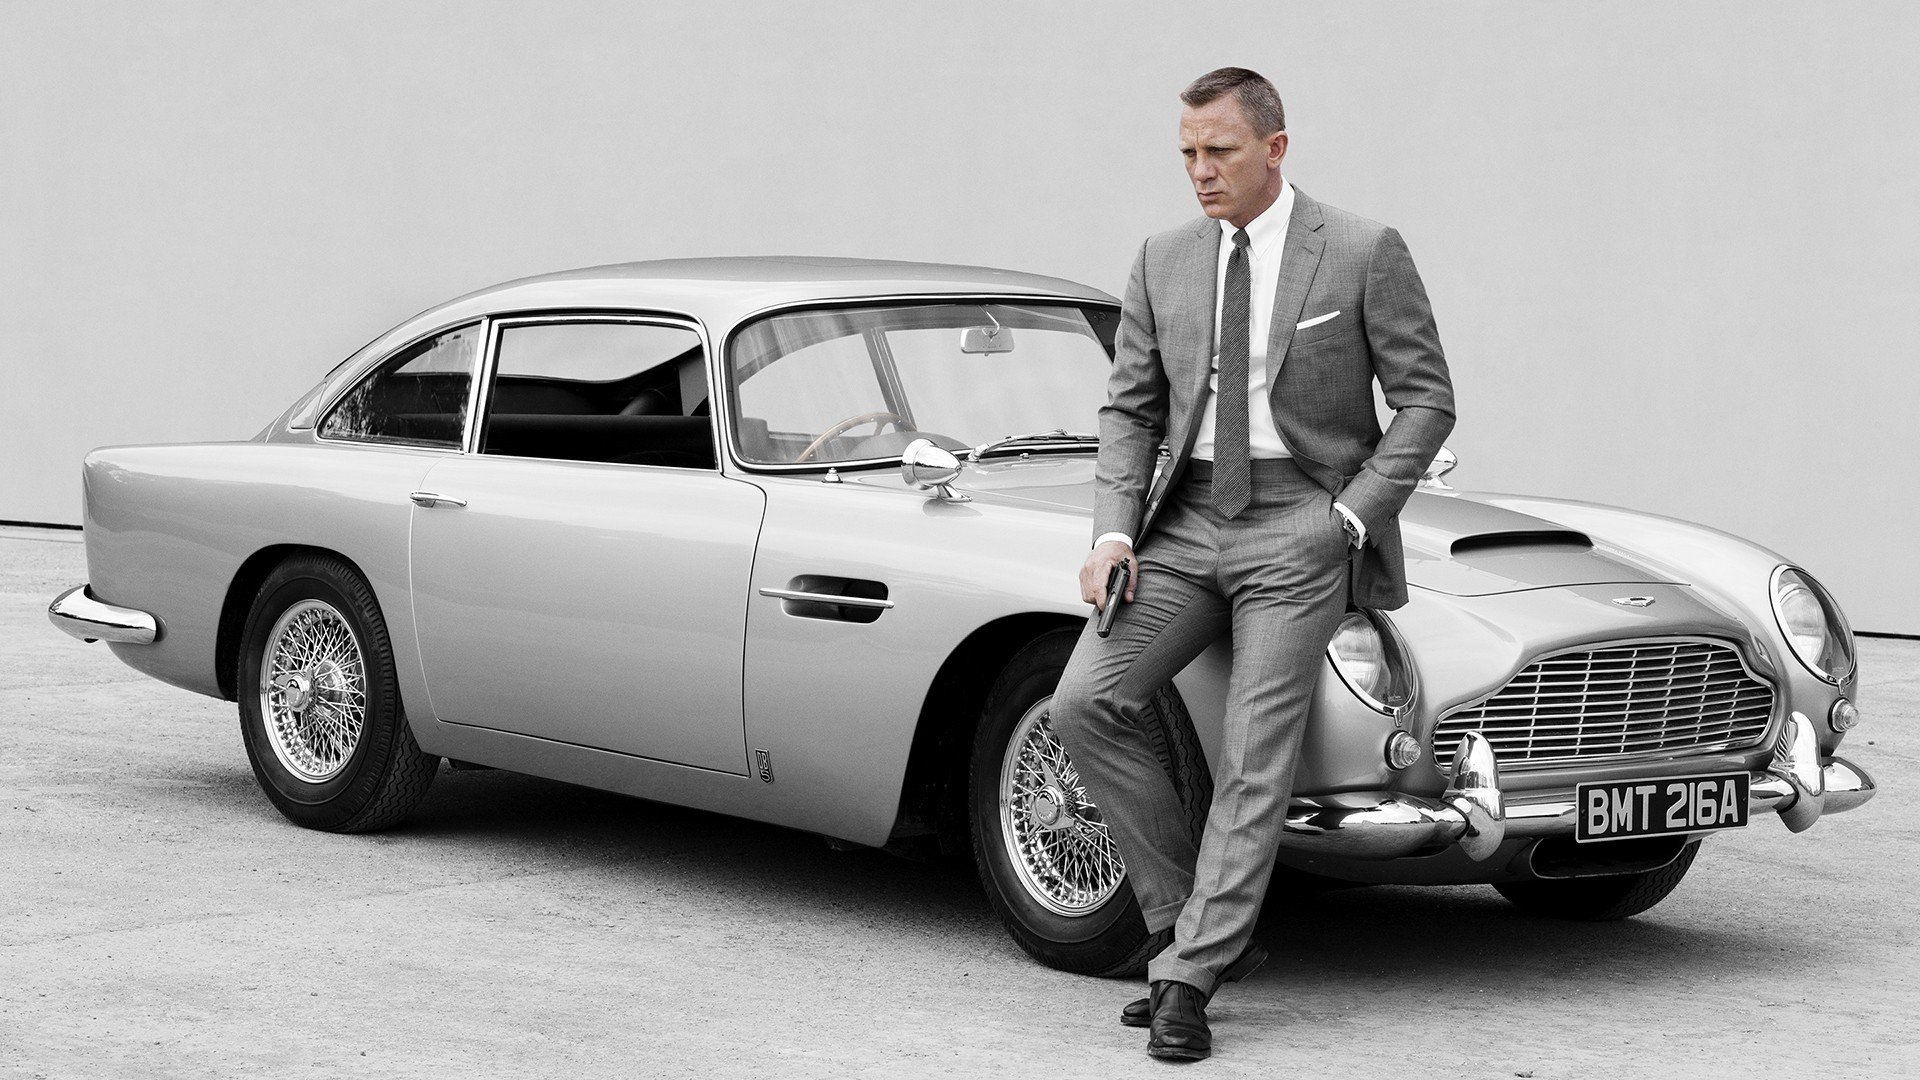 Daniel Craig: Bond, The movies Quantum of Solace, Skyfall, and Spectre, Aston Martin. 1920x1080 Full HD Wallpaper.